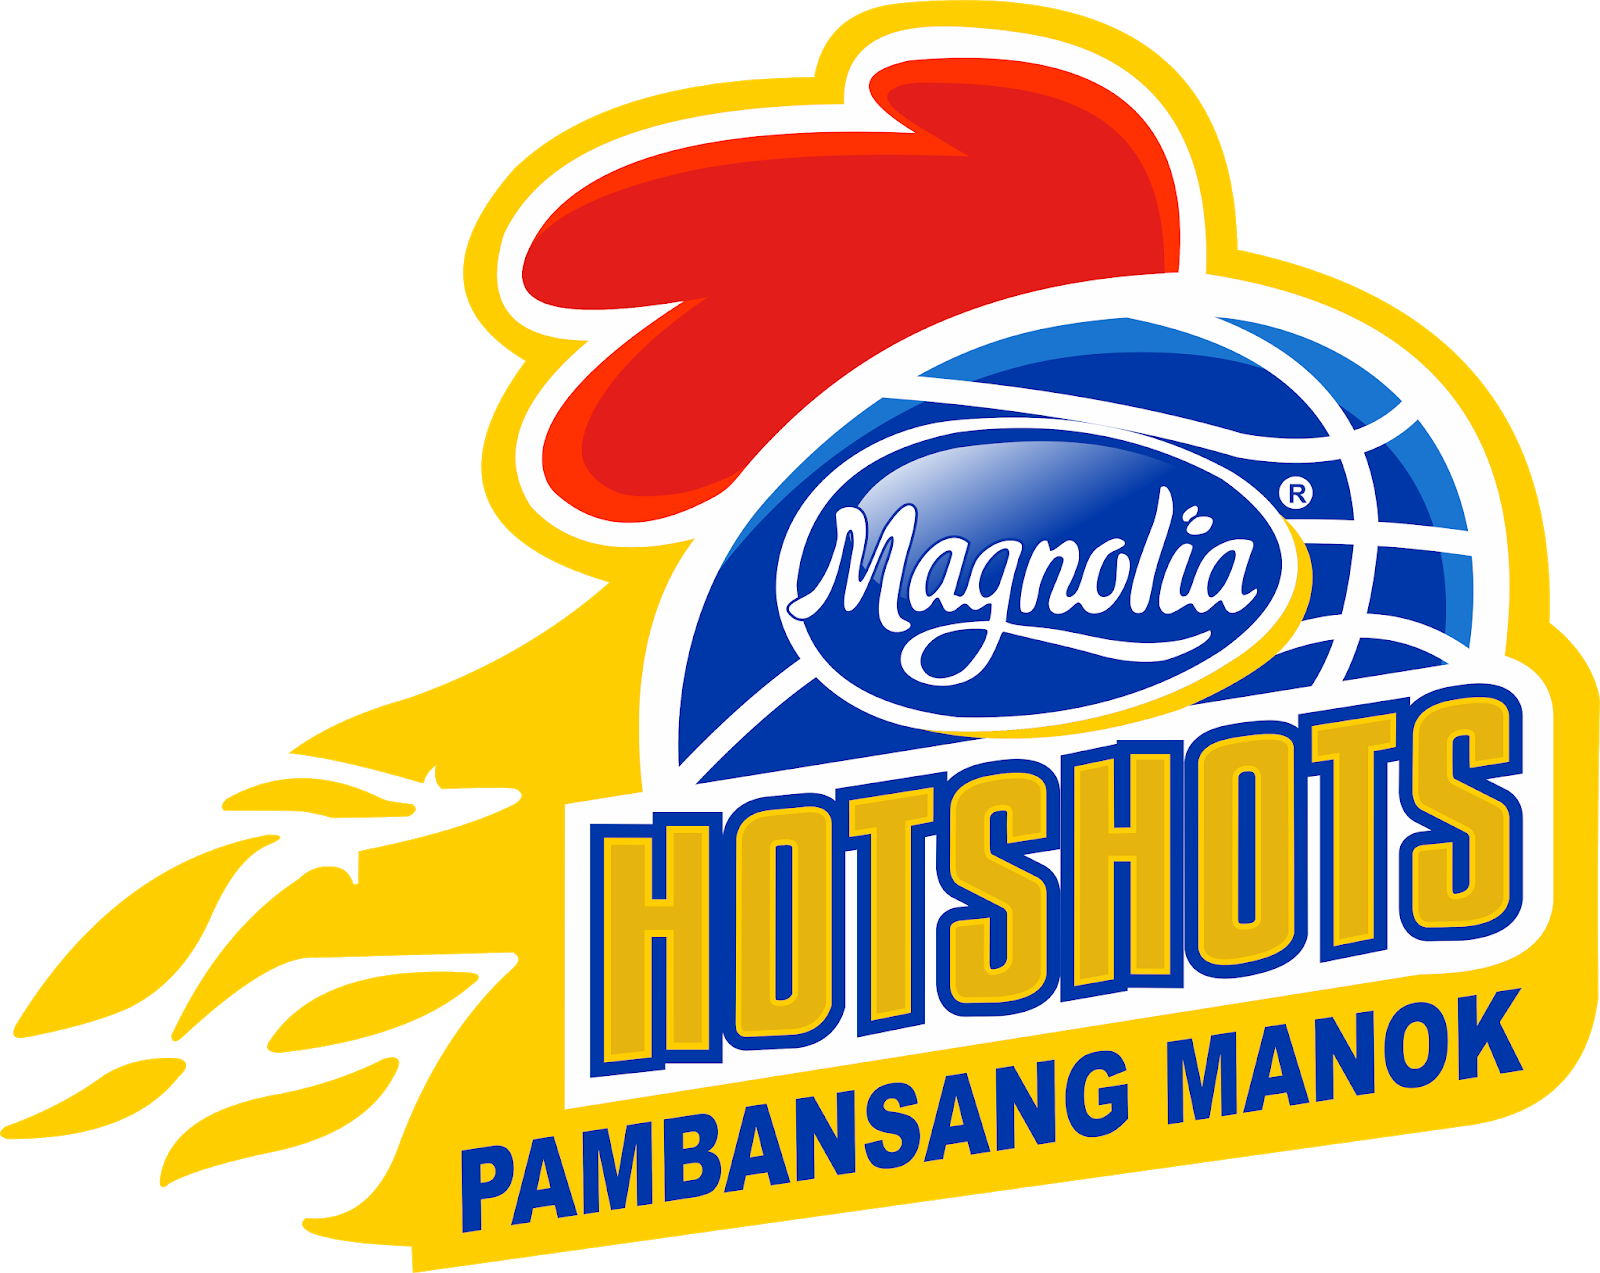 Magnolia Hotshots Basketball Team Logo